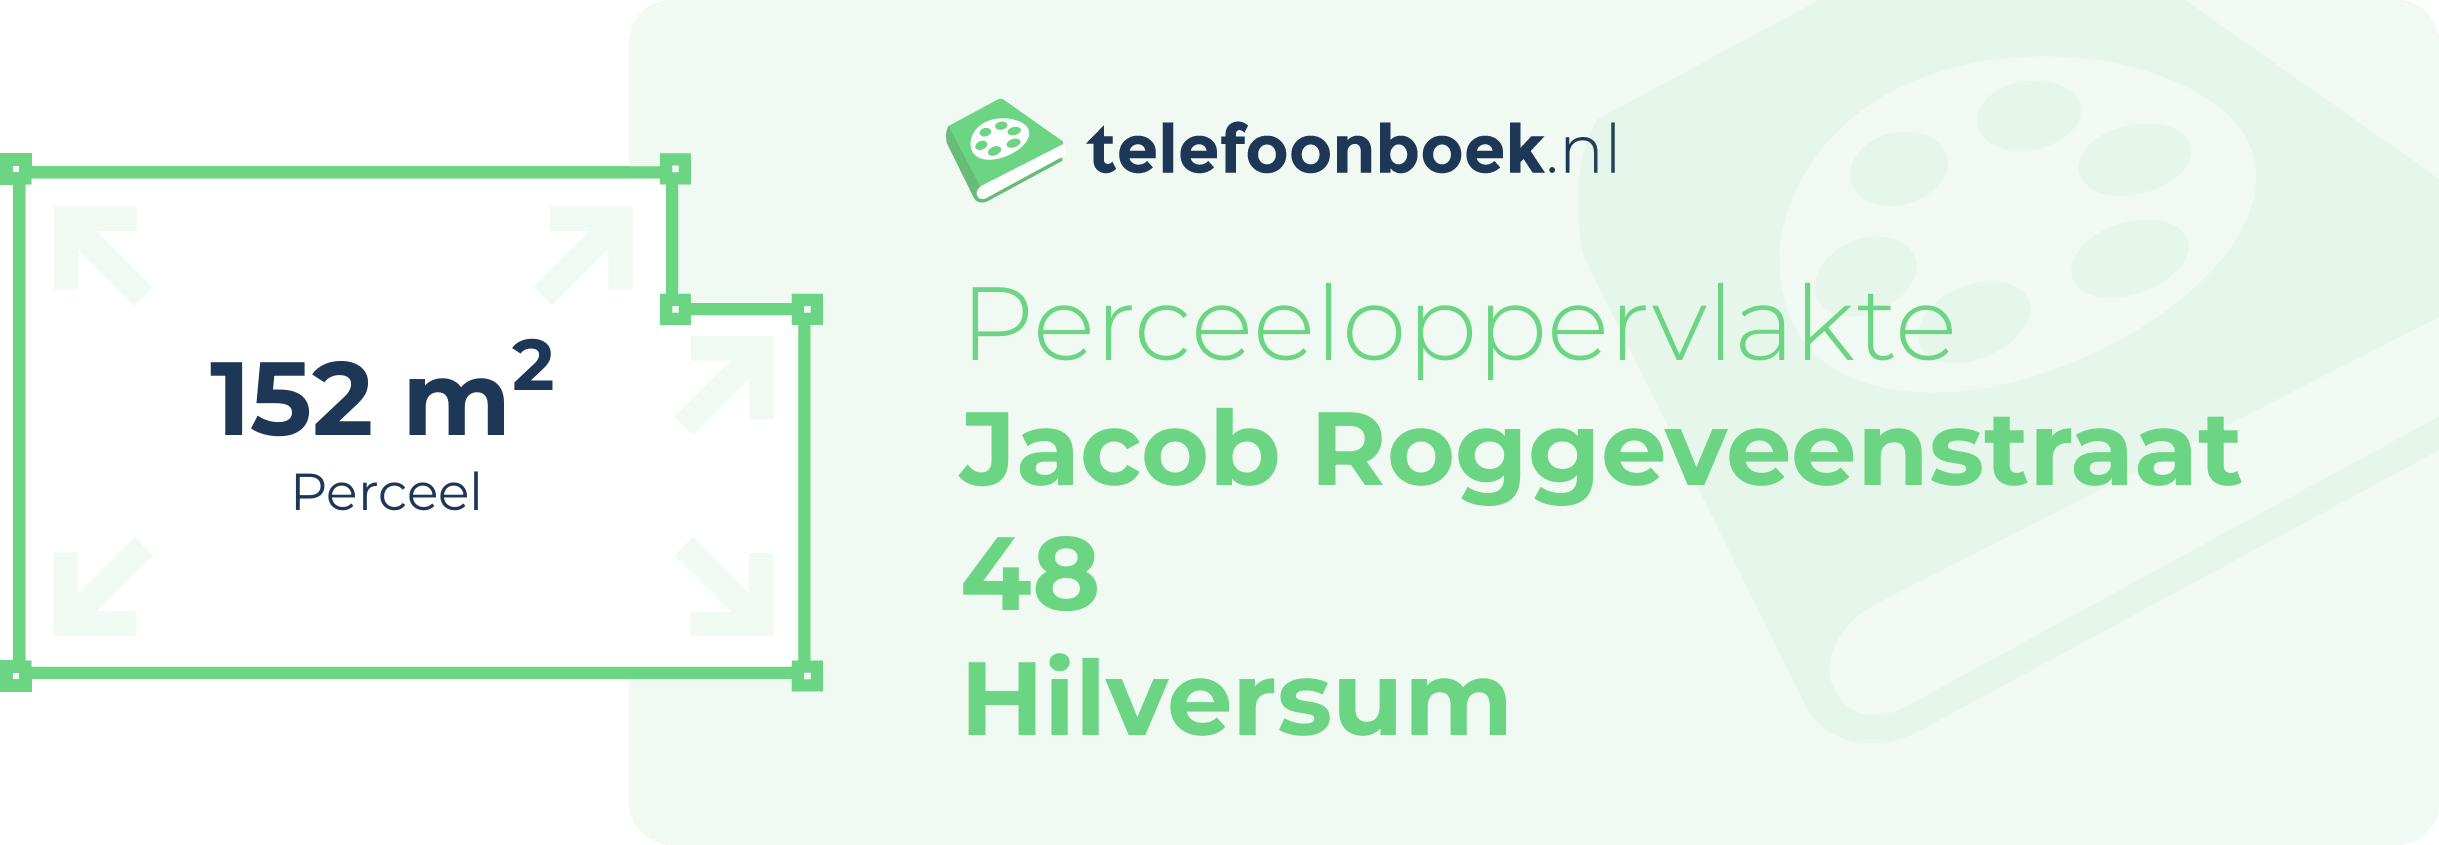 Perceeloppervlakte Jacob Roggeveenstraat 48 Hilversum